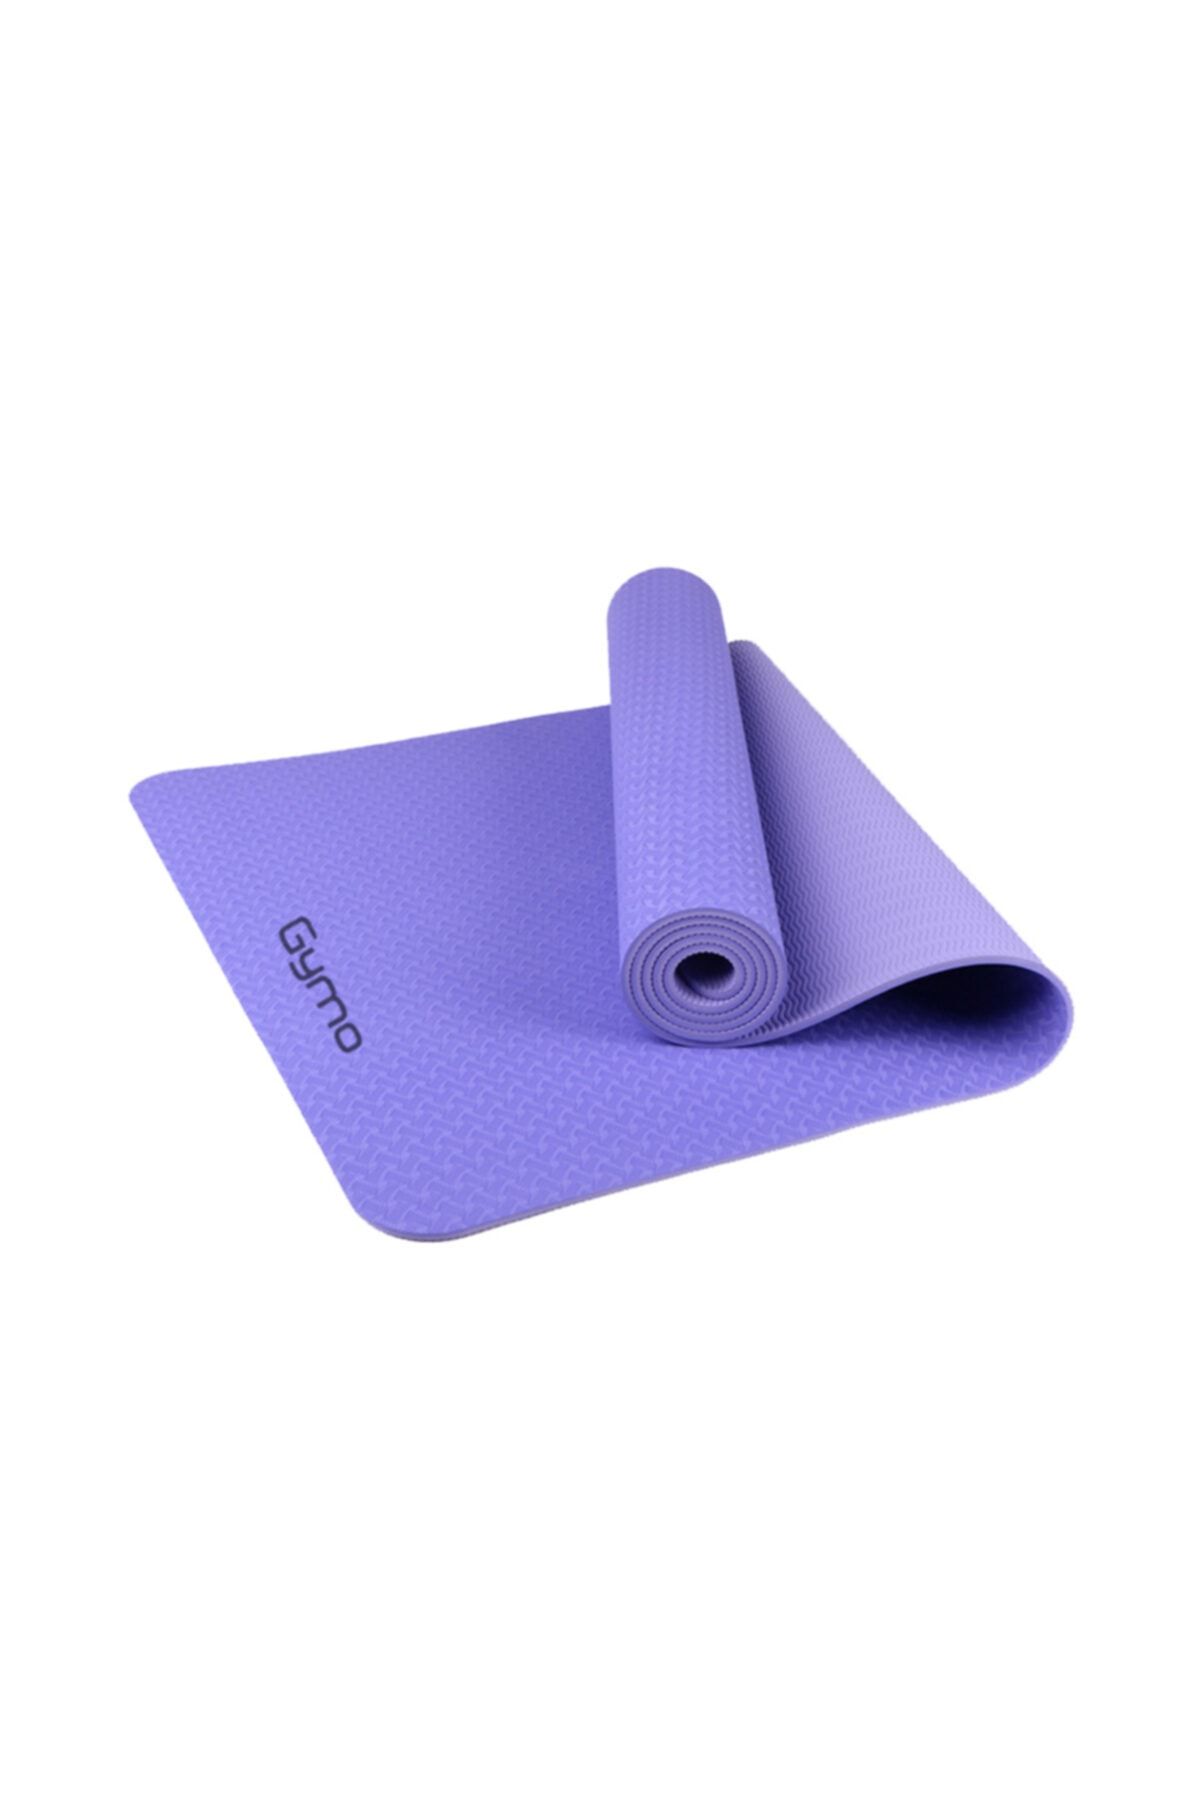 Gymo Pilates Minderi Yoga Matı 6 mm